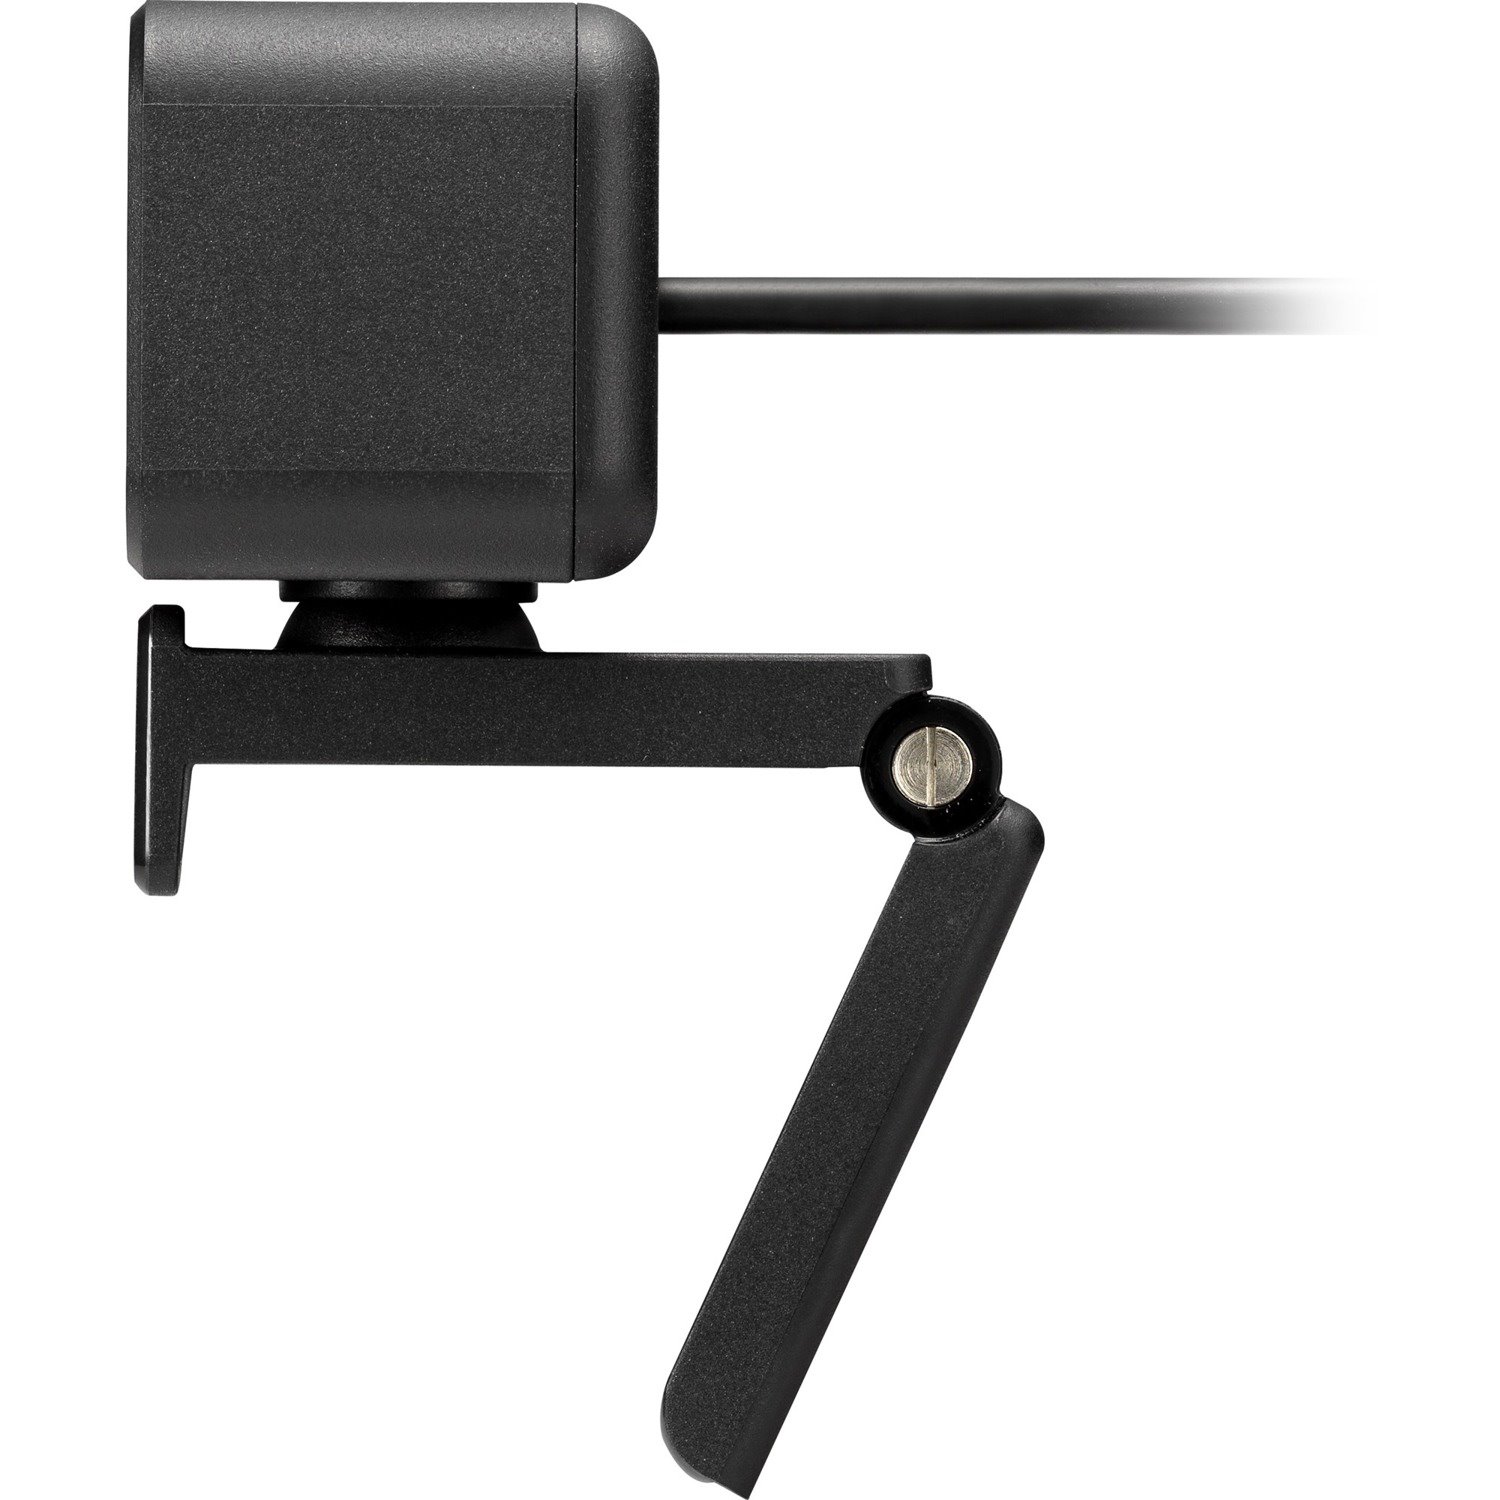 ACCO W1050 Webcam - 2 Megapixel - 30 fps - Black - USB Type A